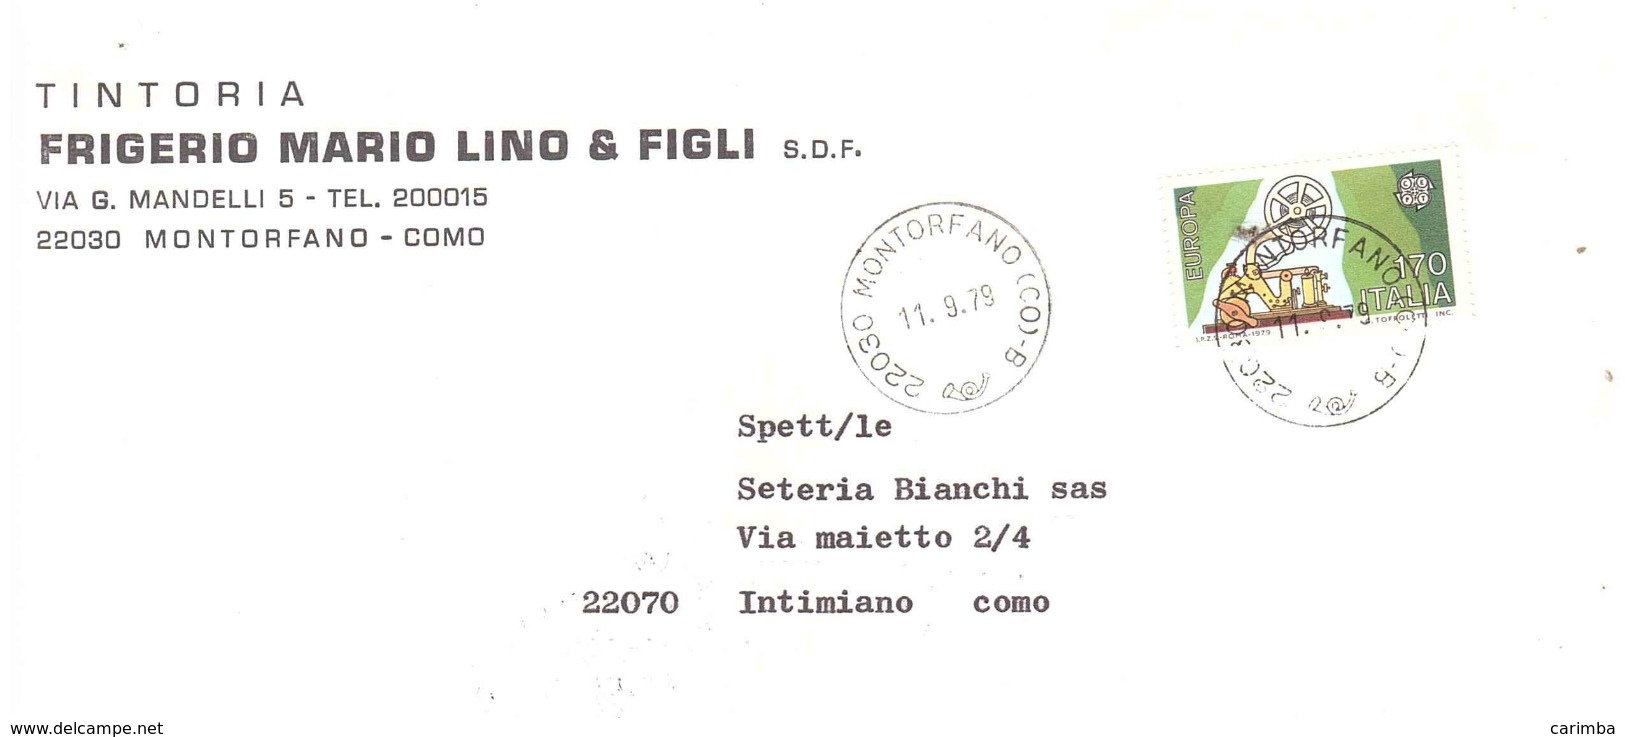 £170 EUROPA SU BUSTA TINTORIA FRIGERIO MONTORFANO COMO - 1979